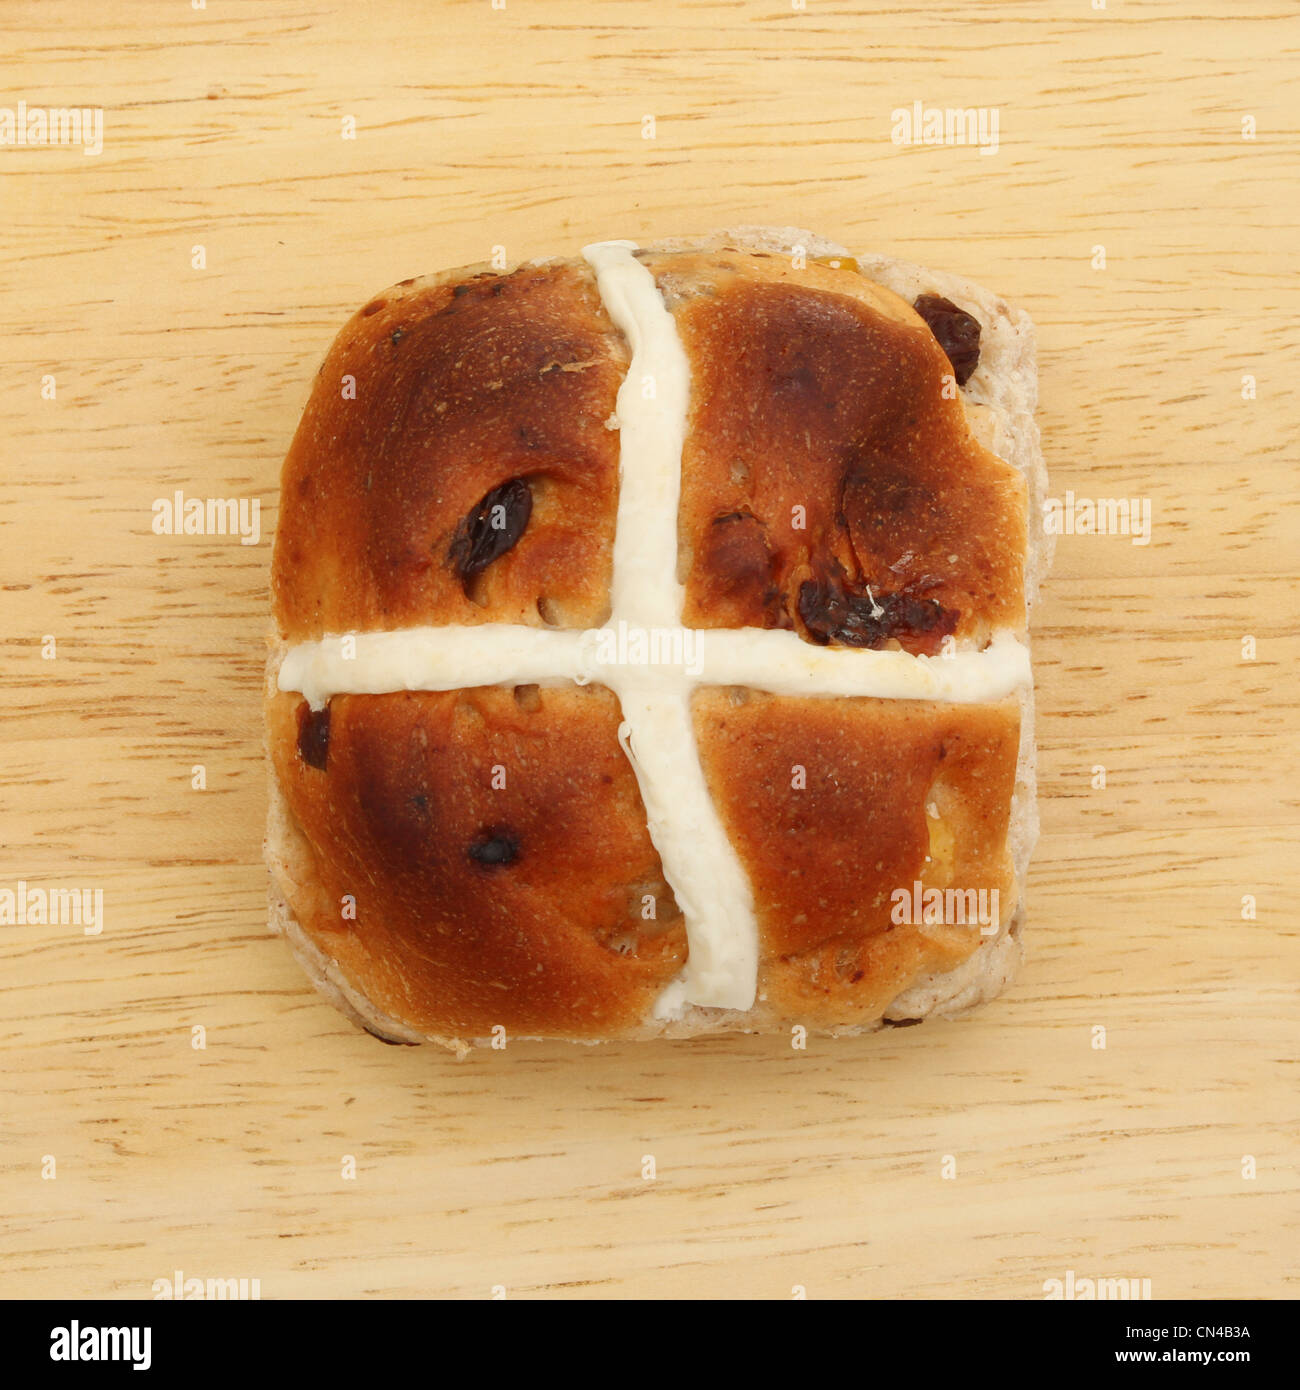 Single hot cross bun on a wooden board Stock Photo